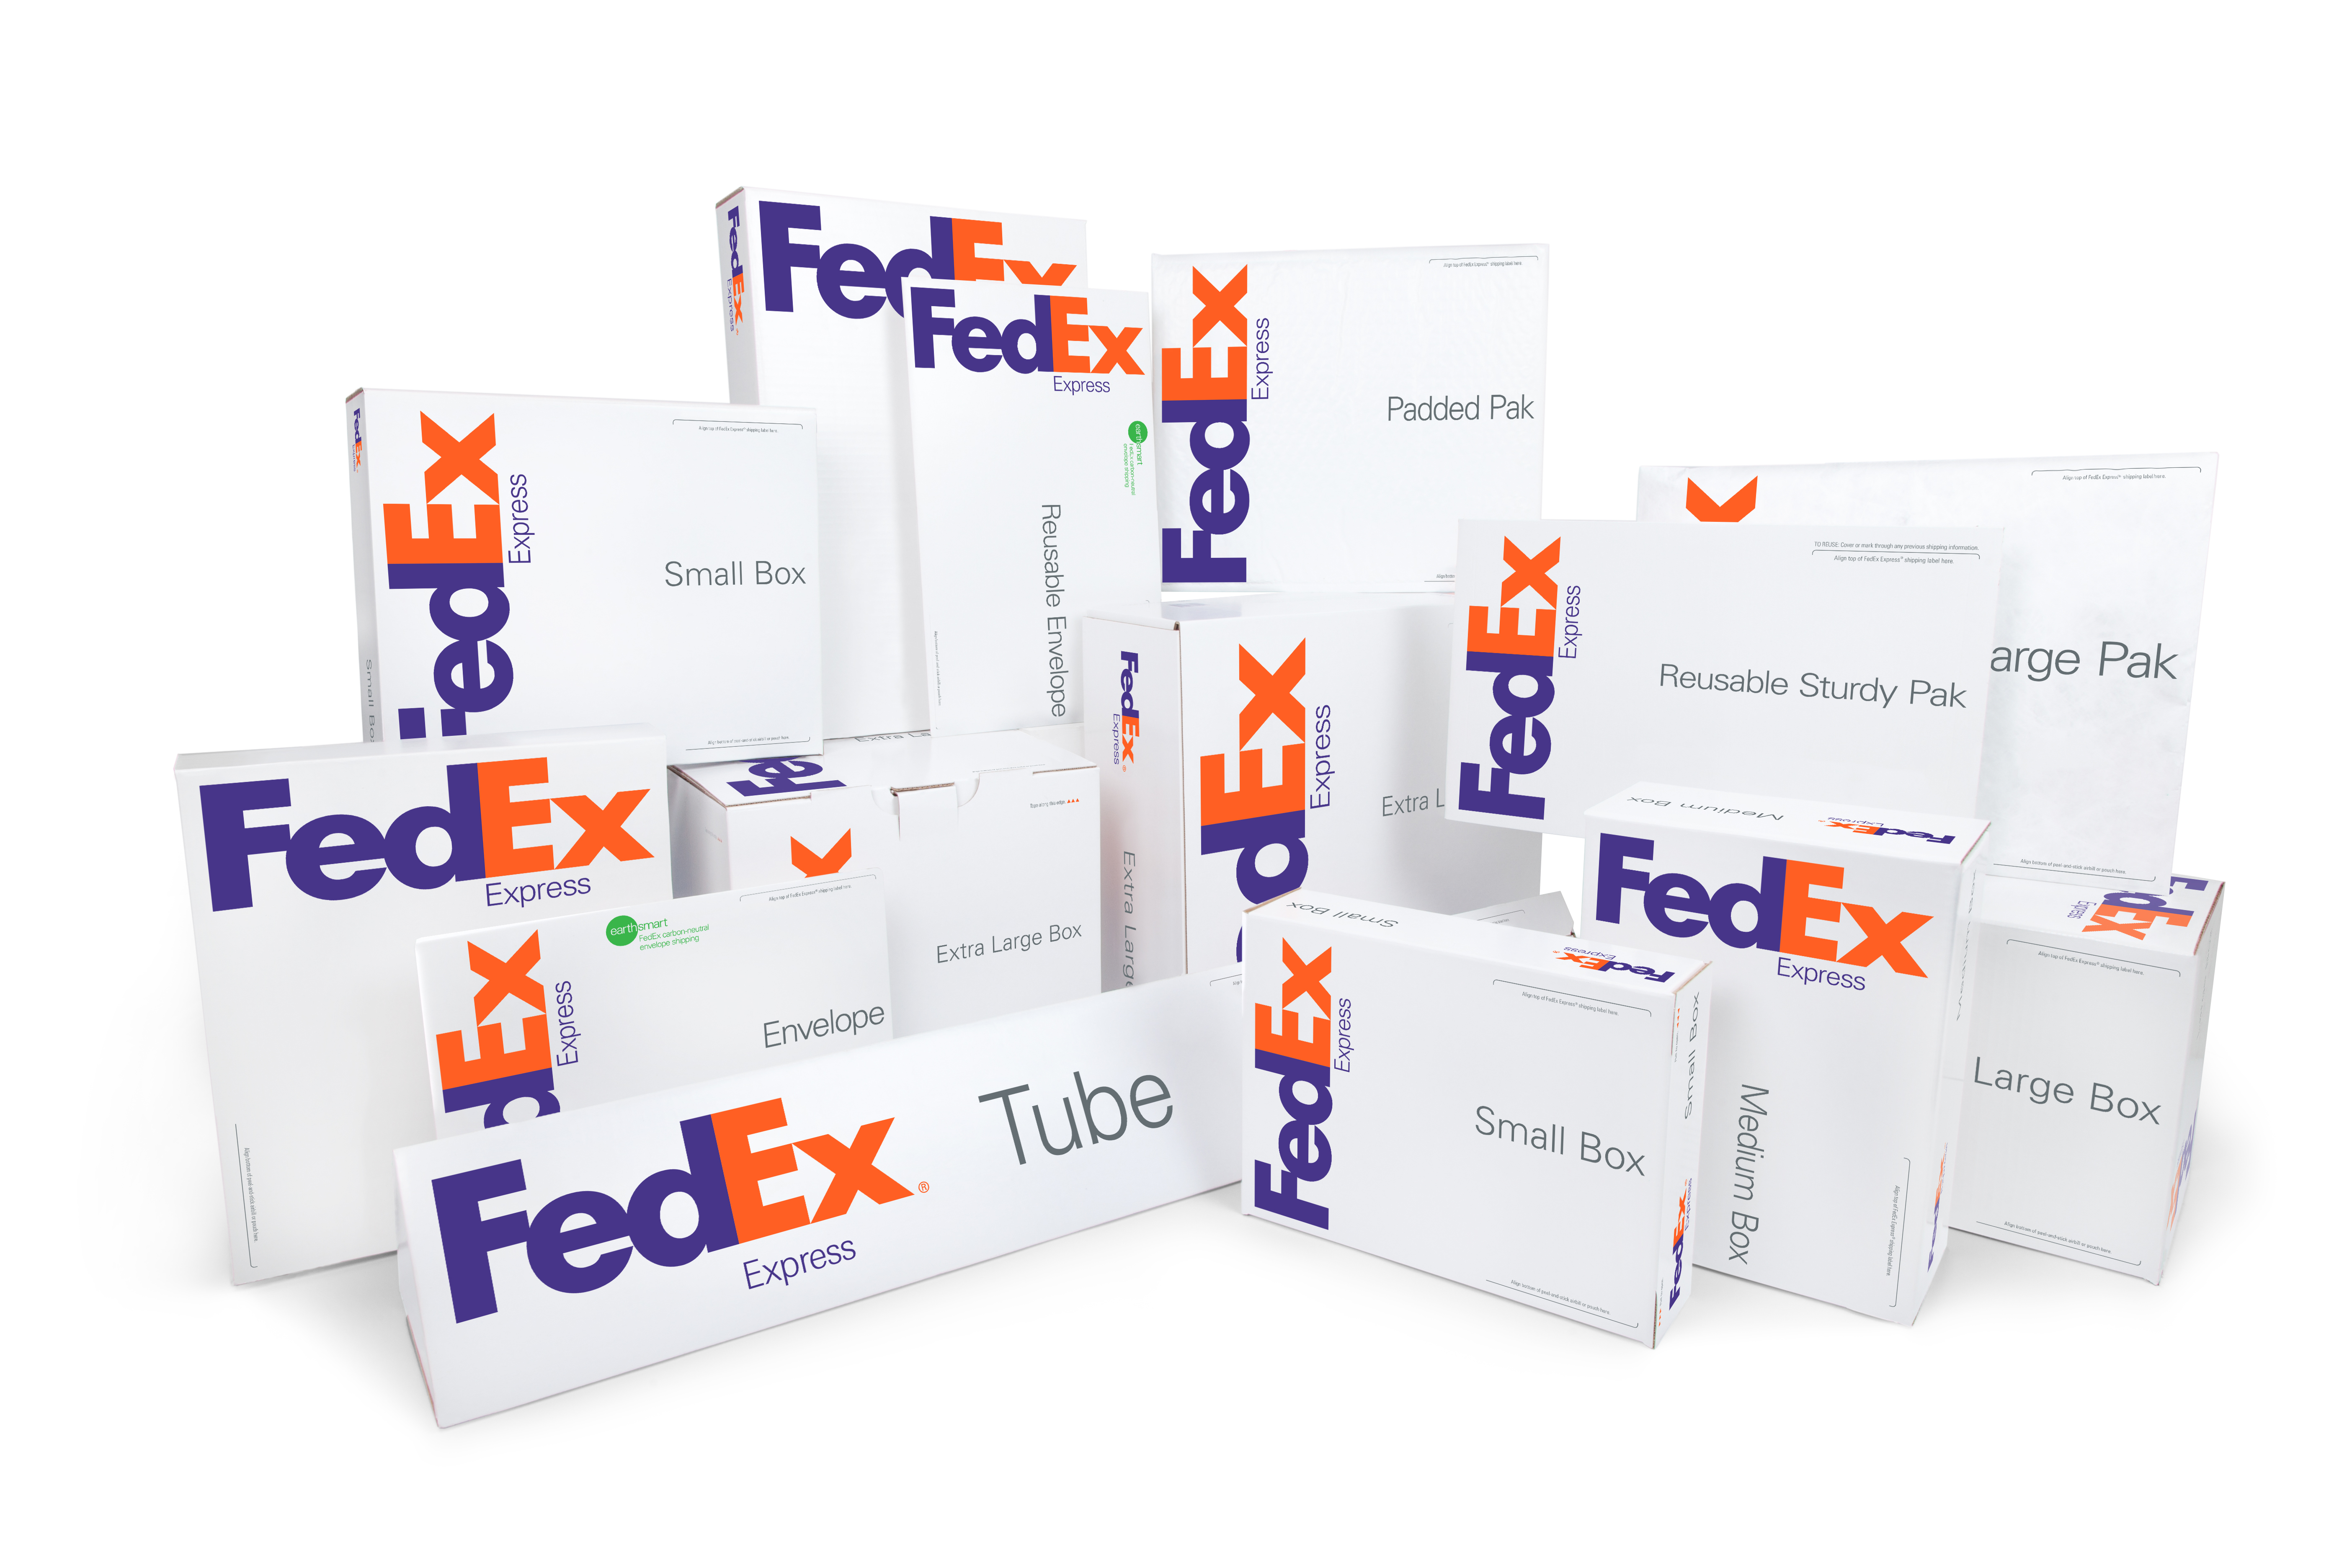 FedEx Express Packaging Landscape: Boxes, Paks, Envelopes